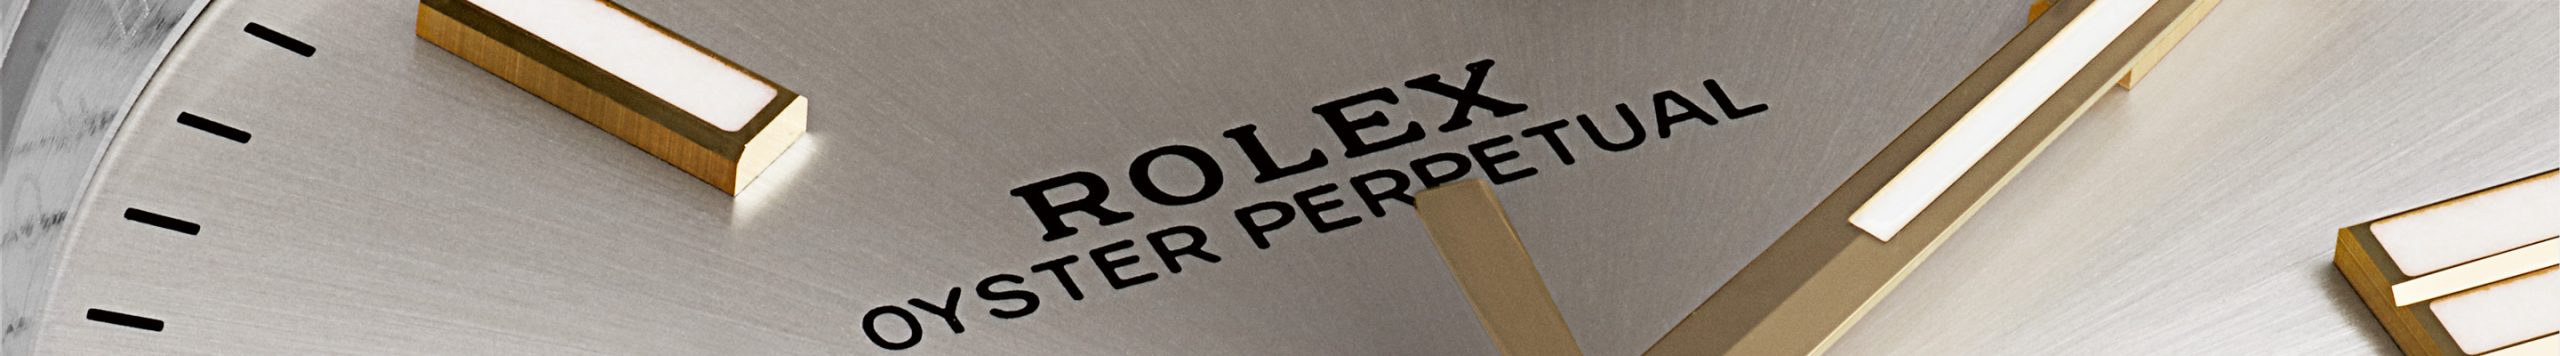 Rolex en – PEYRELONGUE CHRONOS